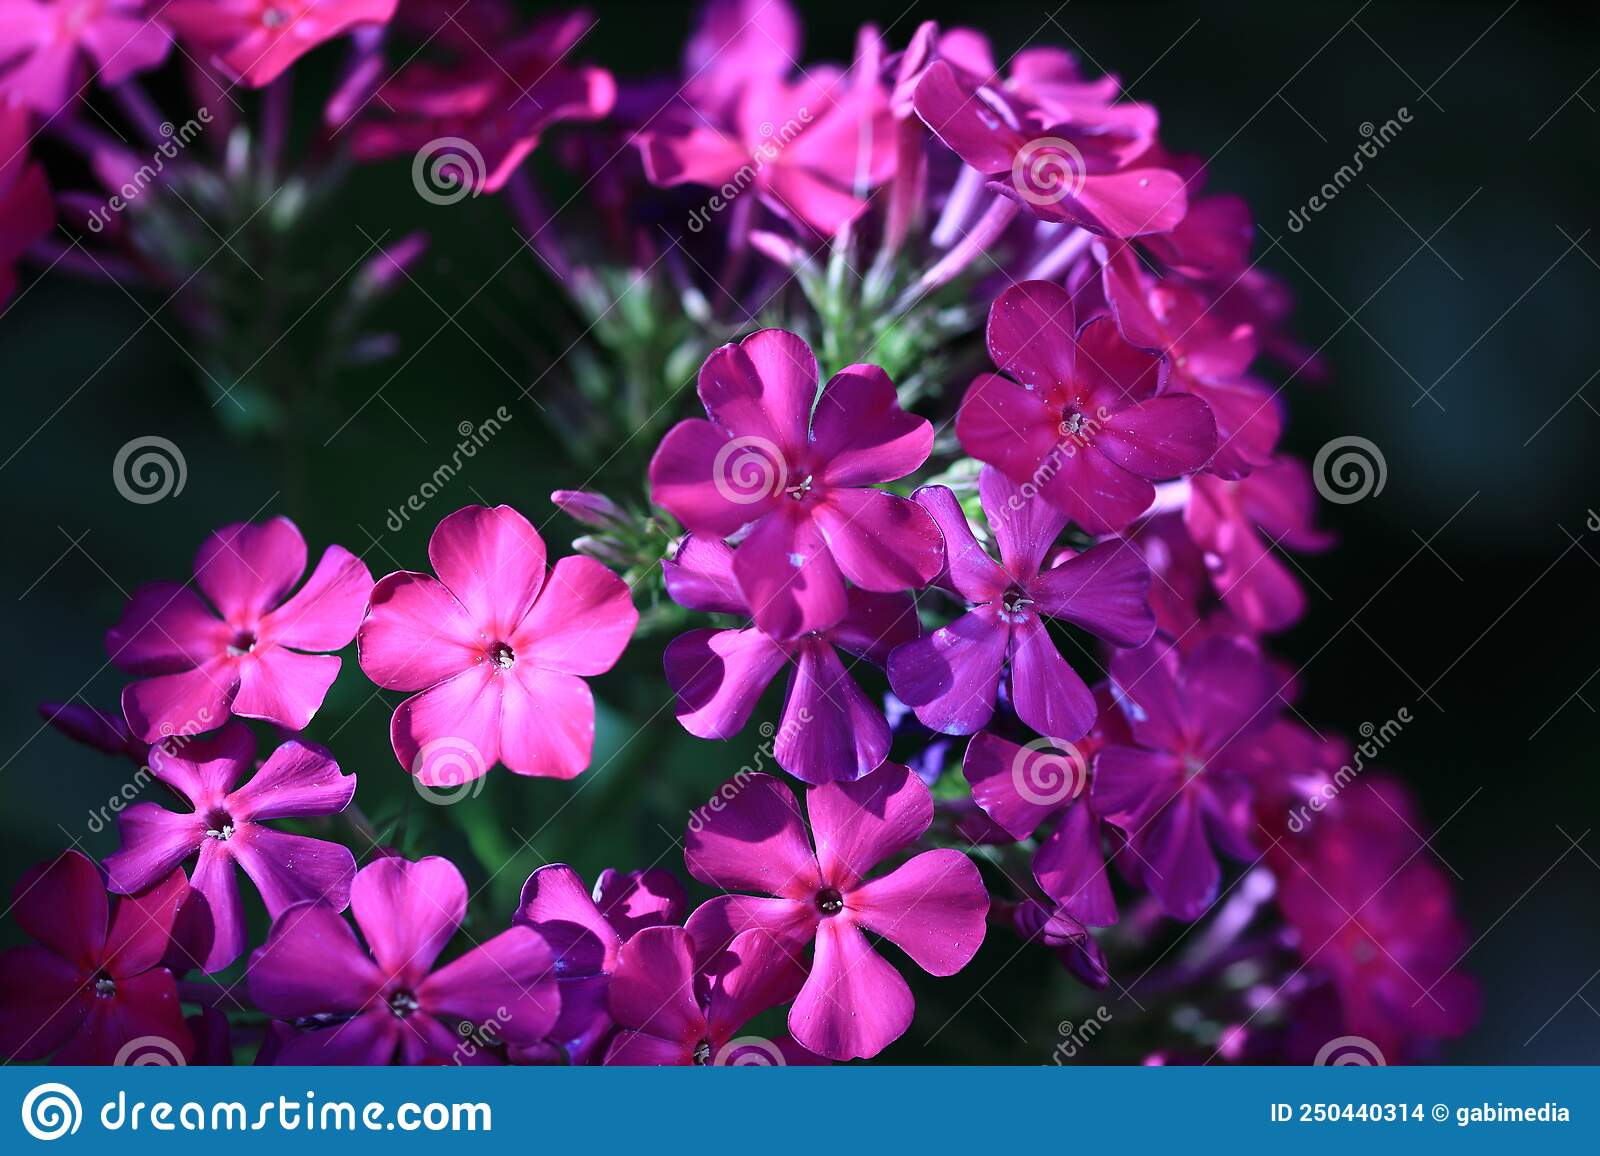 Bouquet of purple flowers in the garden. Artistic macro image. 